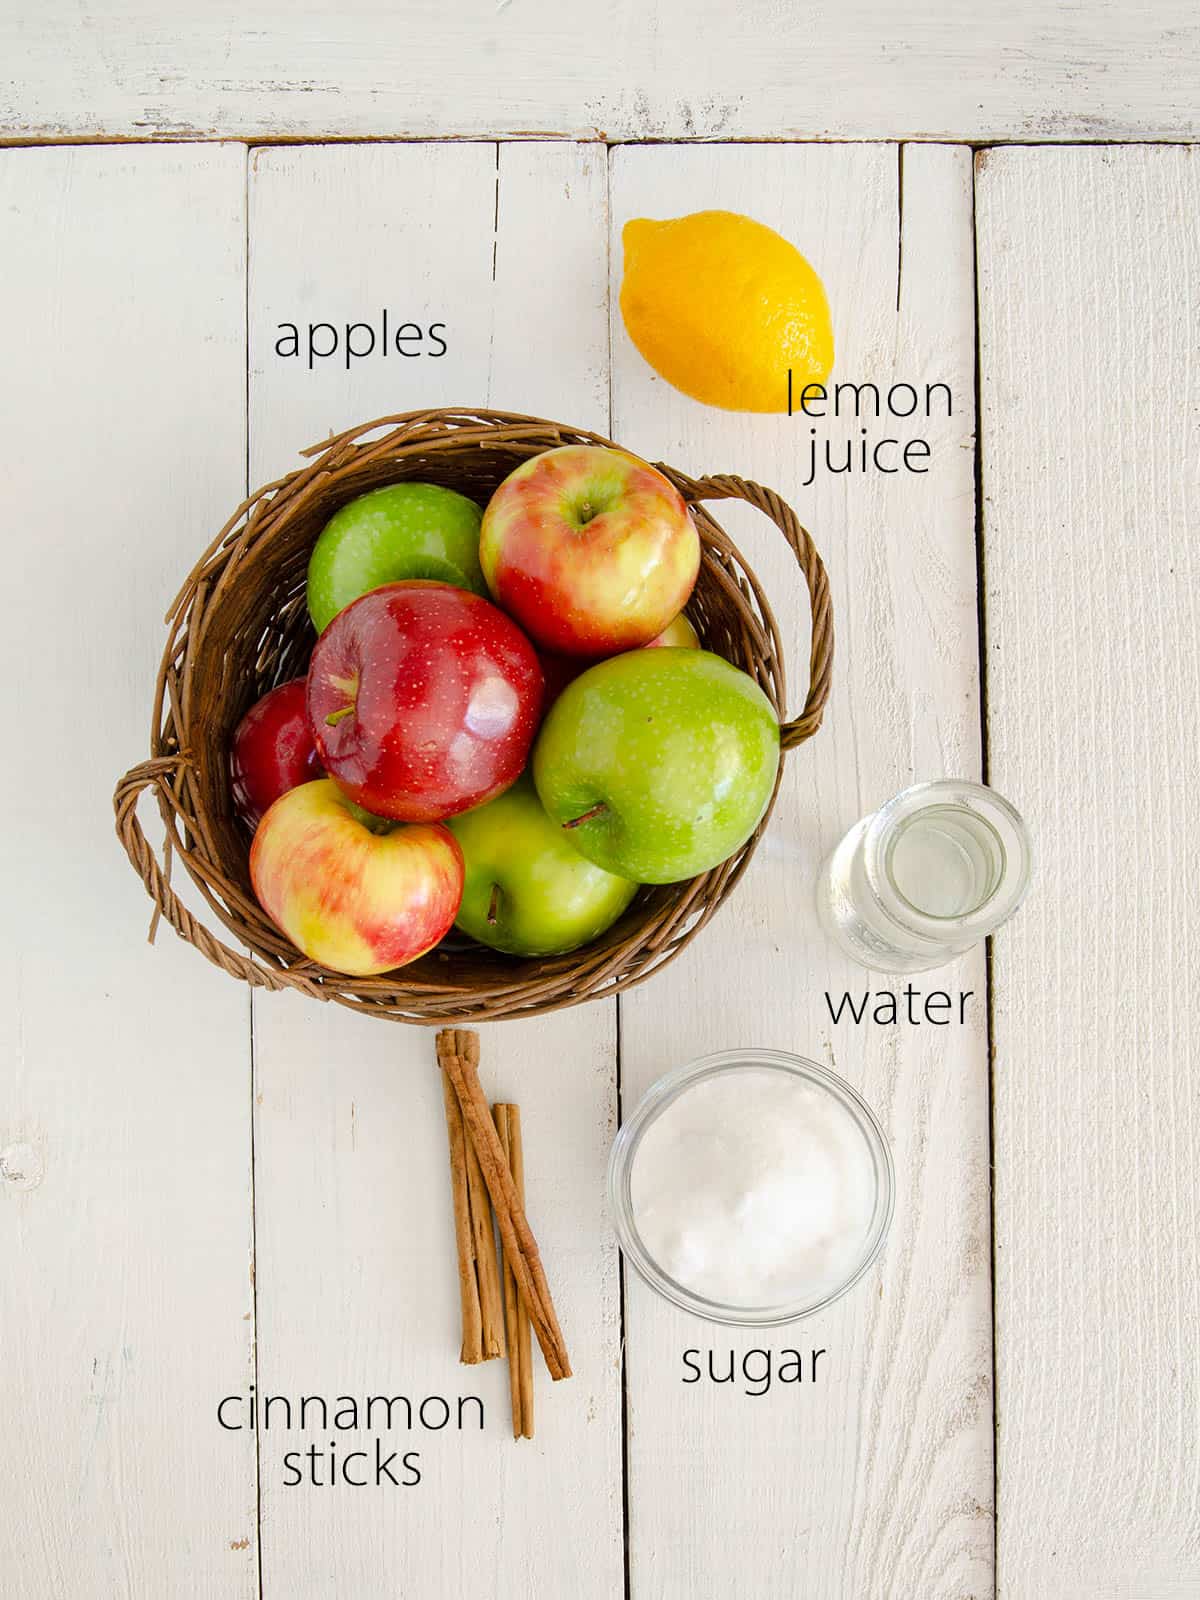 Ingredients needed to make applesauce.